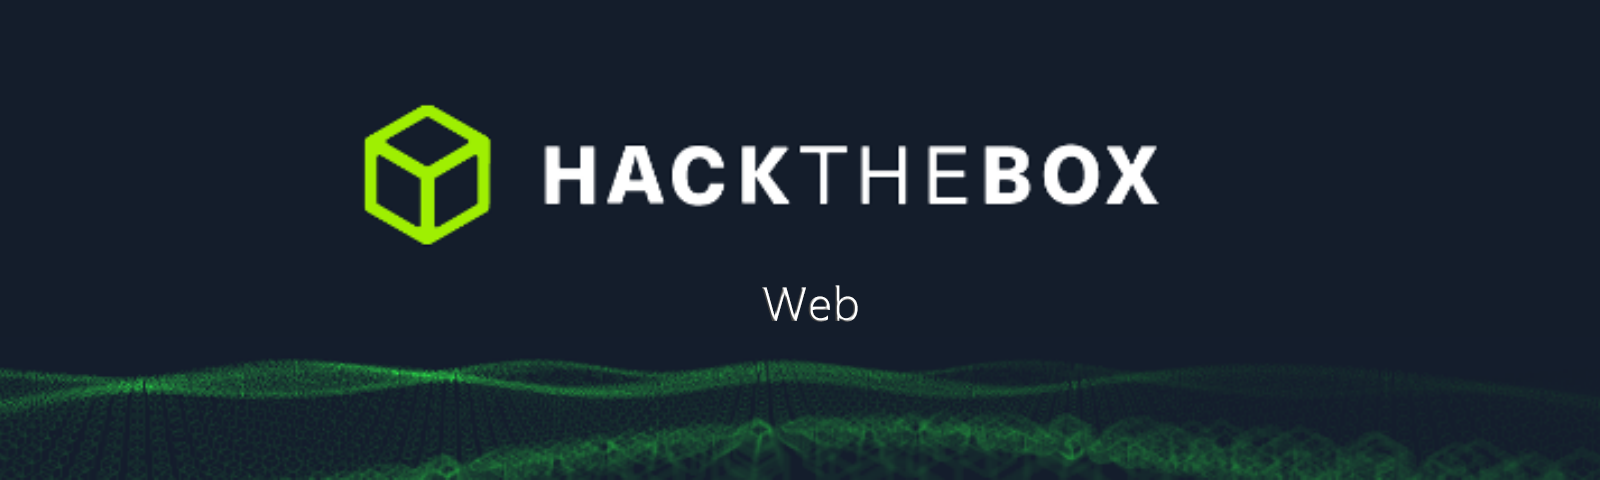 HackTheBox Web Study - 1